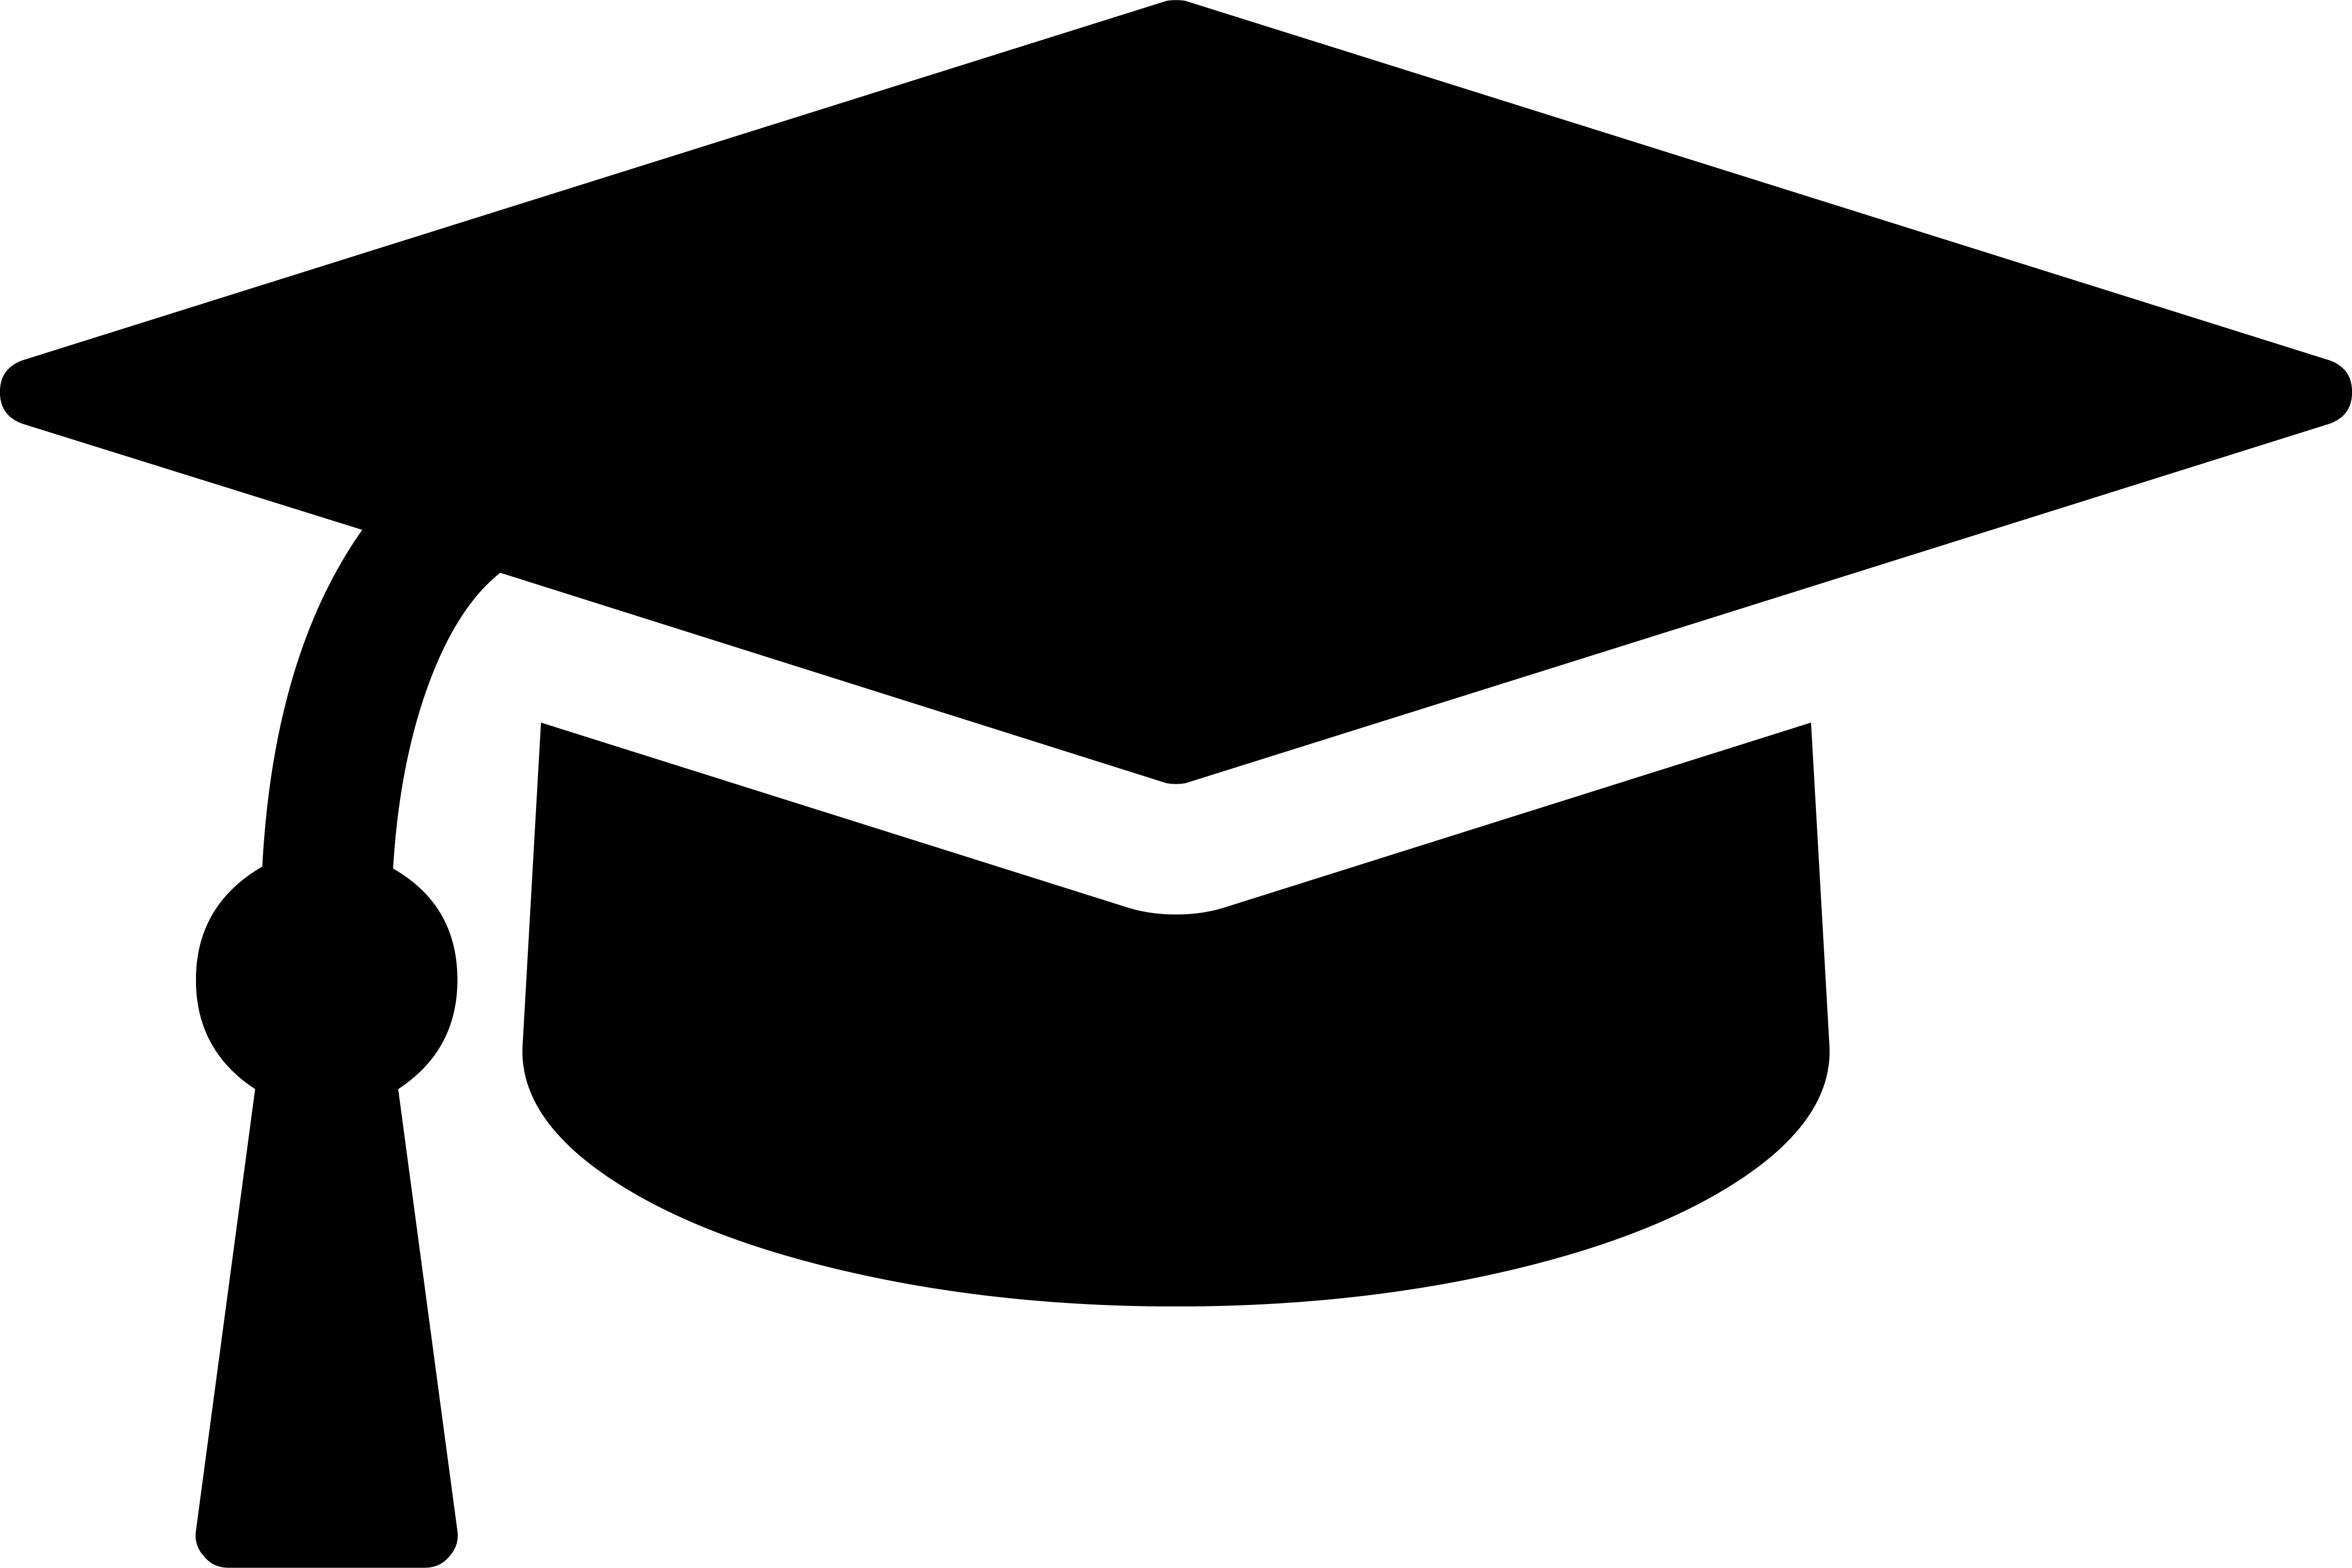 Cap graduation image